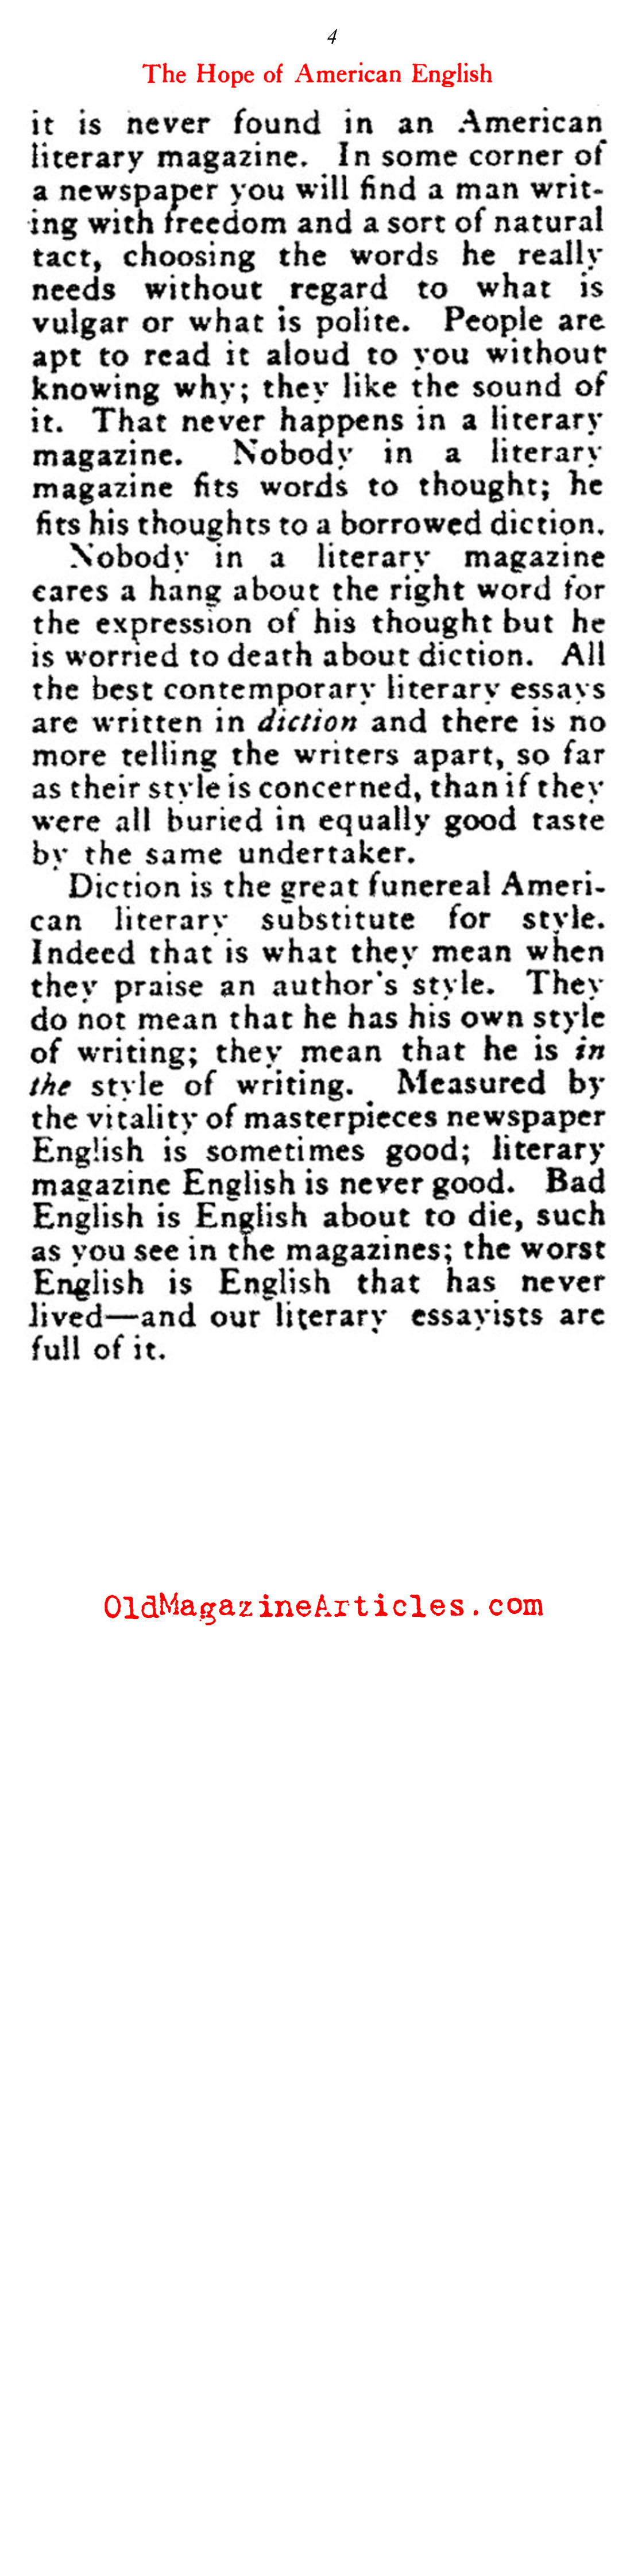 ''The Hope of American English'' (Vanity Fair Magazine, 1919)